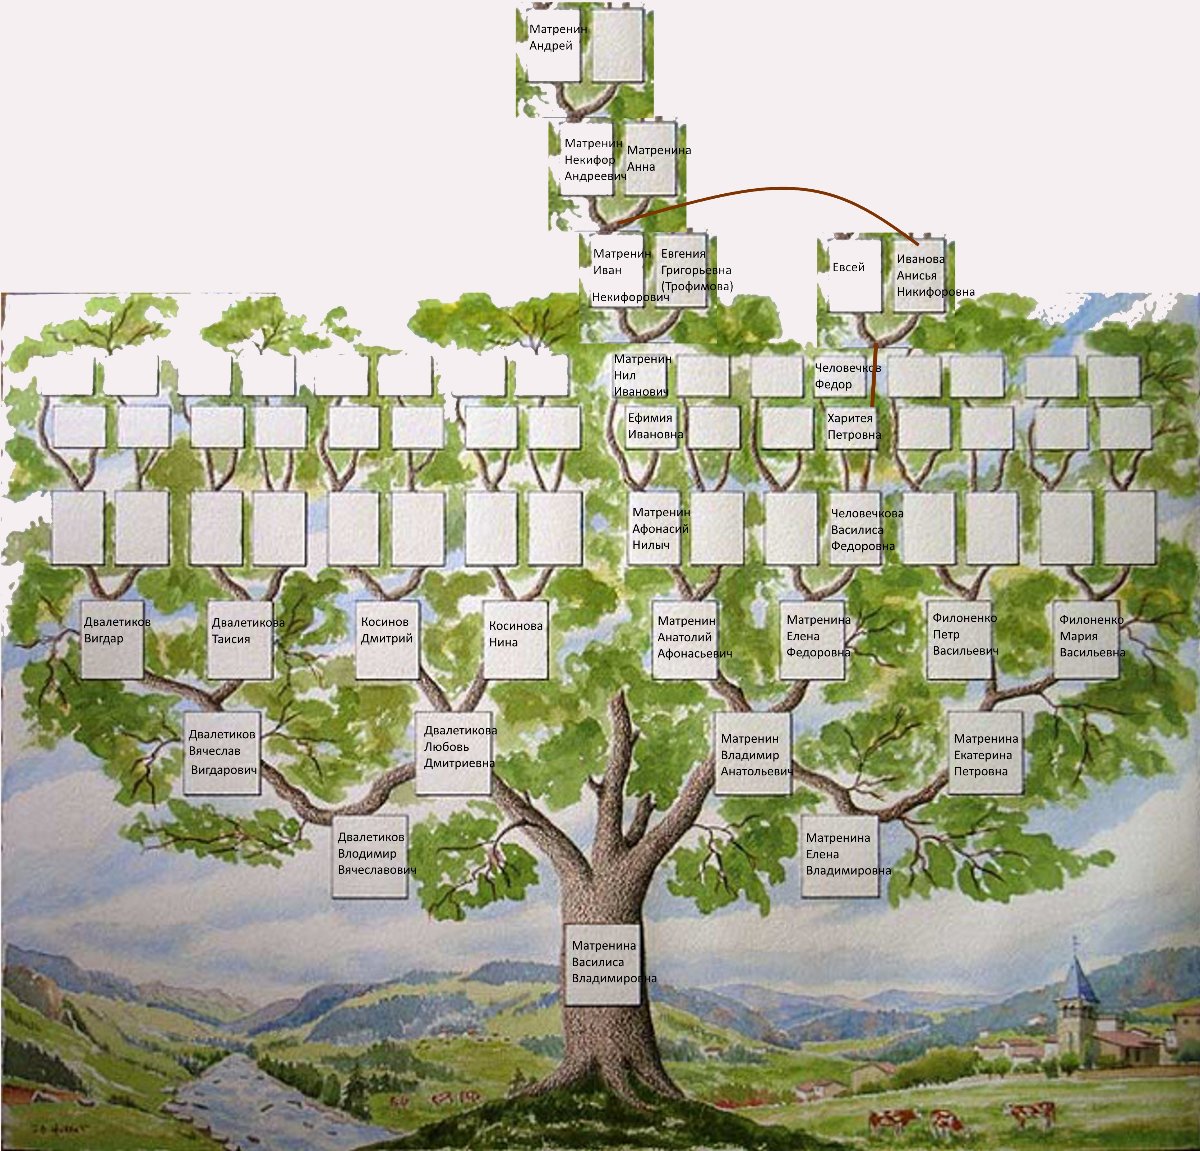 Родословное дерево. Родословная дерево Стародубовский. Генеалогия генеалогическое Древо. Родословная генетическая дерево.